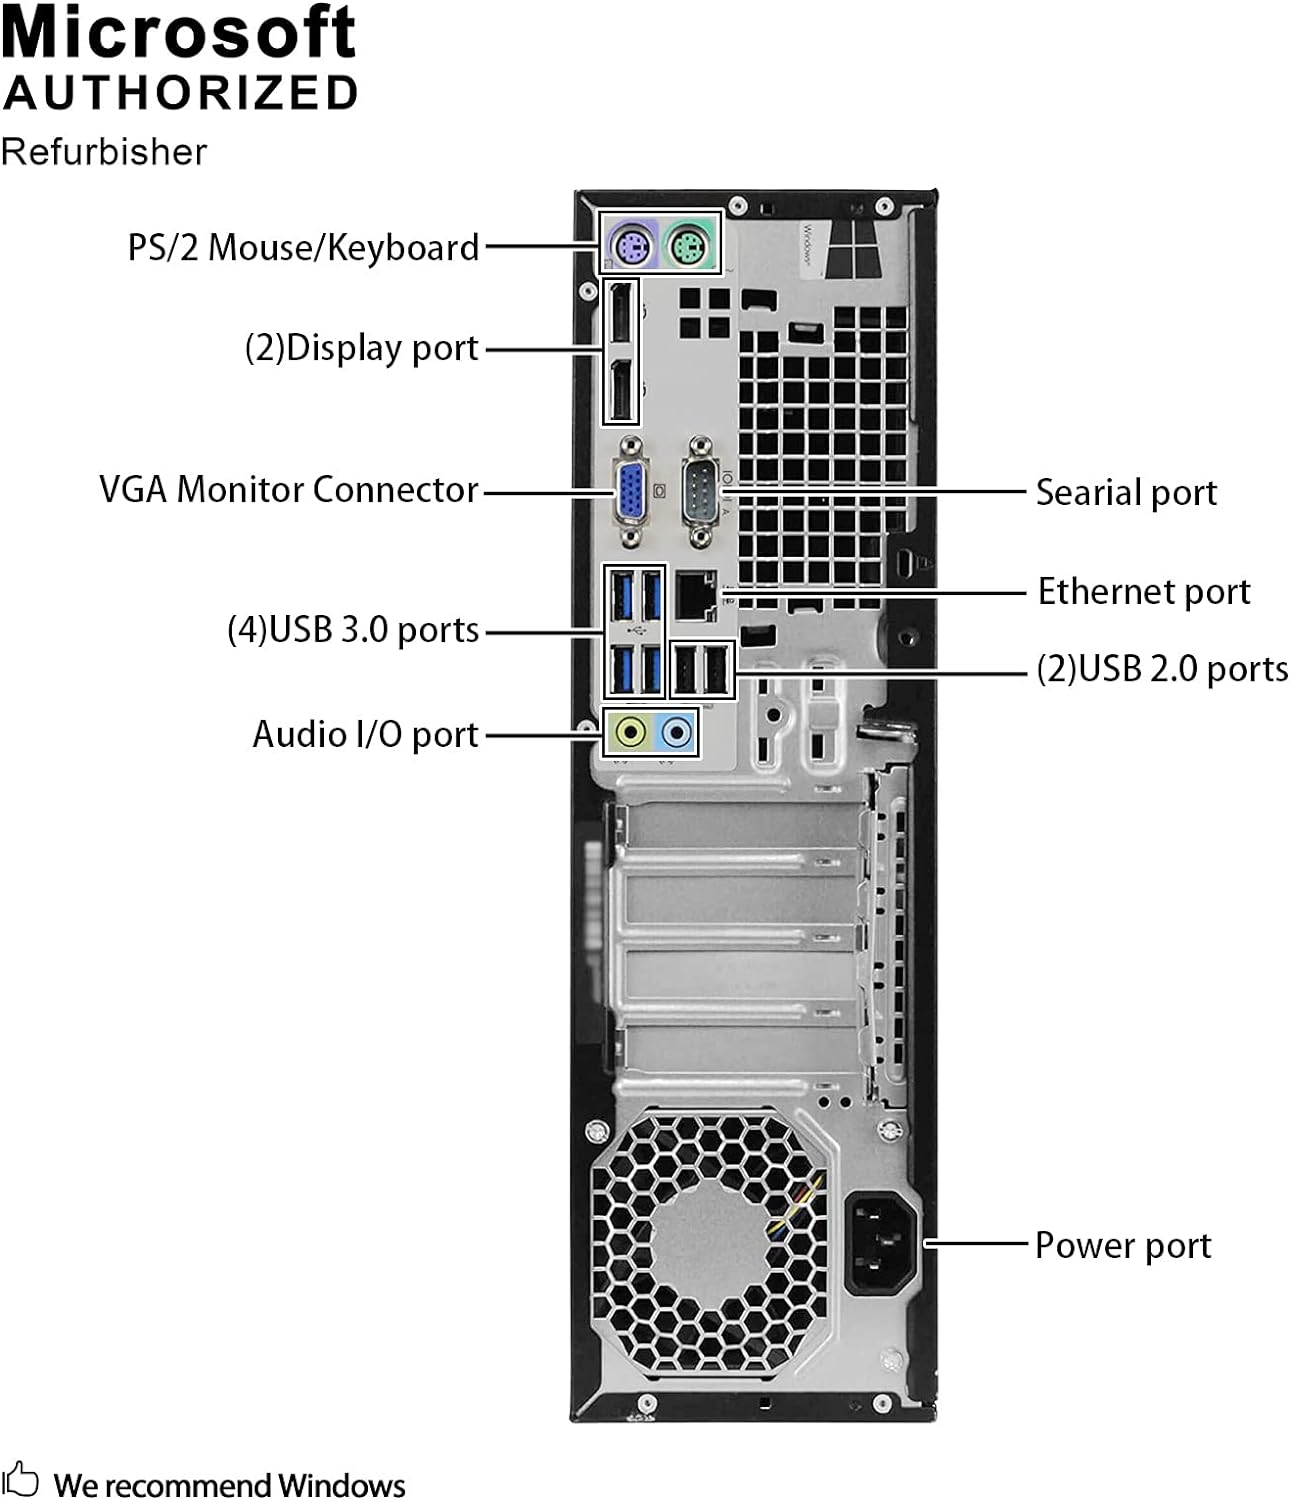 HP Business Desktop ProDesk 600 G2 Desktop Computer - Intel Core i5 (6th Gen) i5-6500 3.20 GHz - 8 GB DDR4 SDRAM - 256 GB SSD (Renewed)